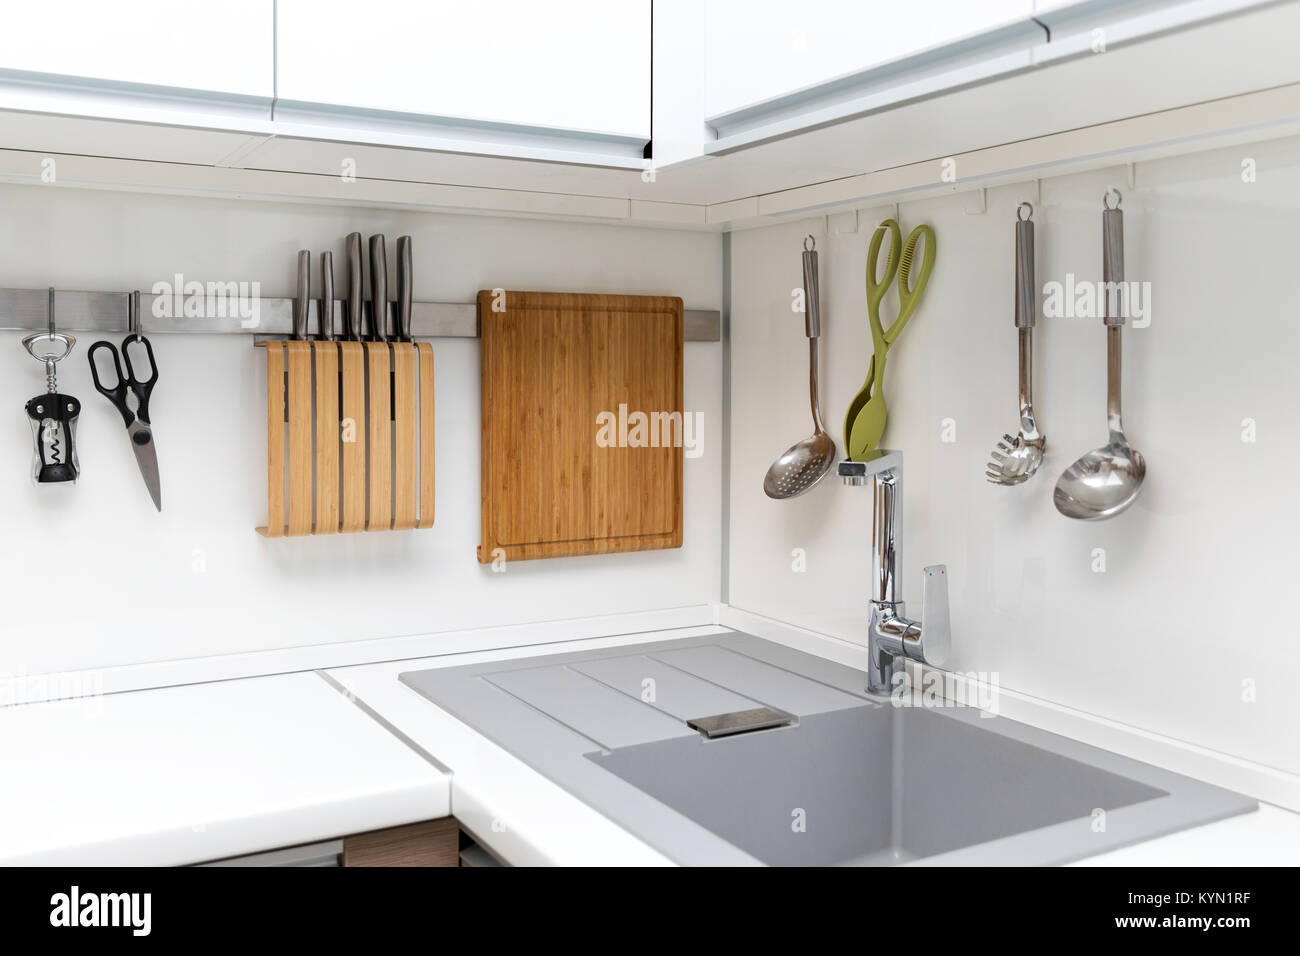 https://c8.alamy.com/comp/KYN1RF/white-glossy-kitchen-interior-design-with-hanging-utensils-KYN1RF.jpg